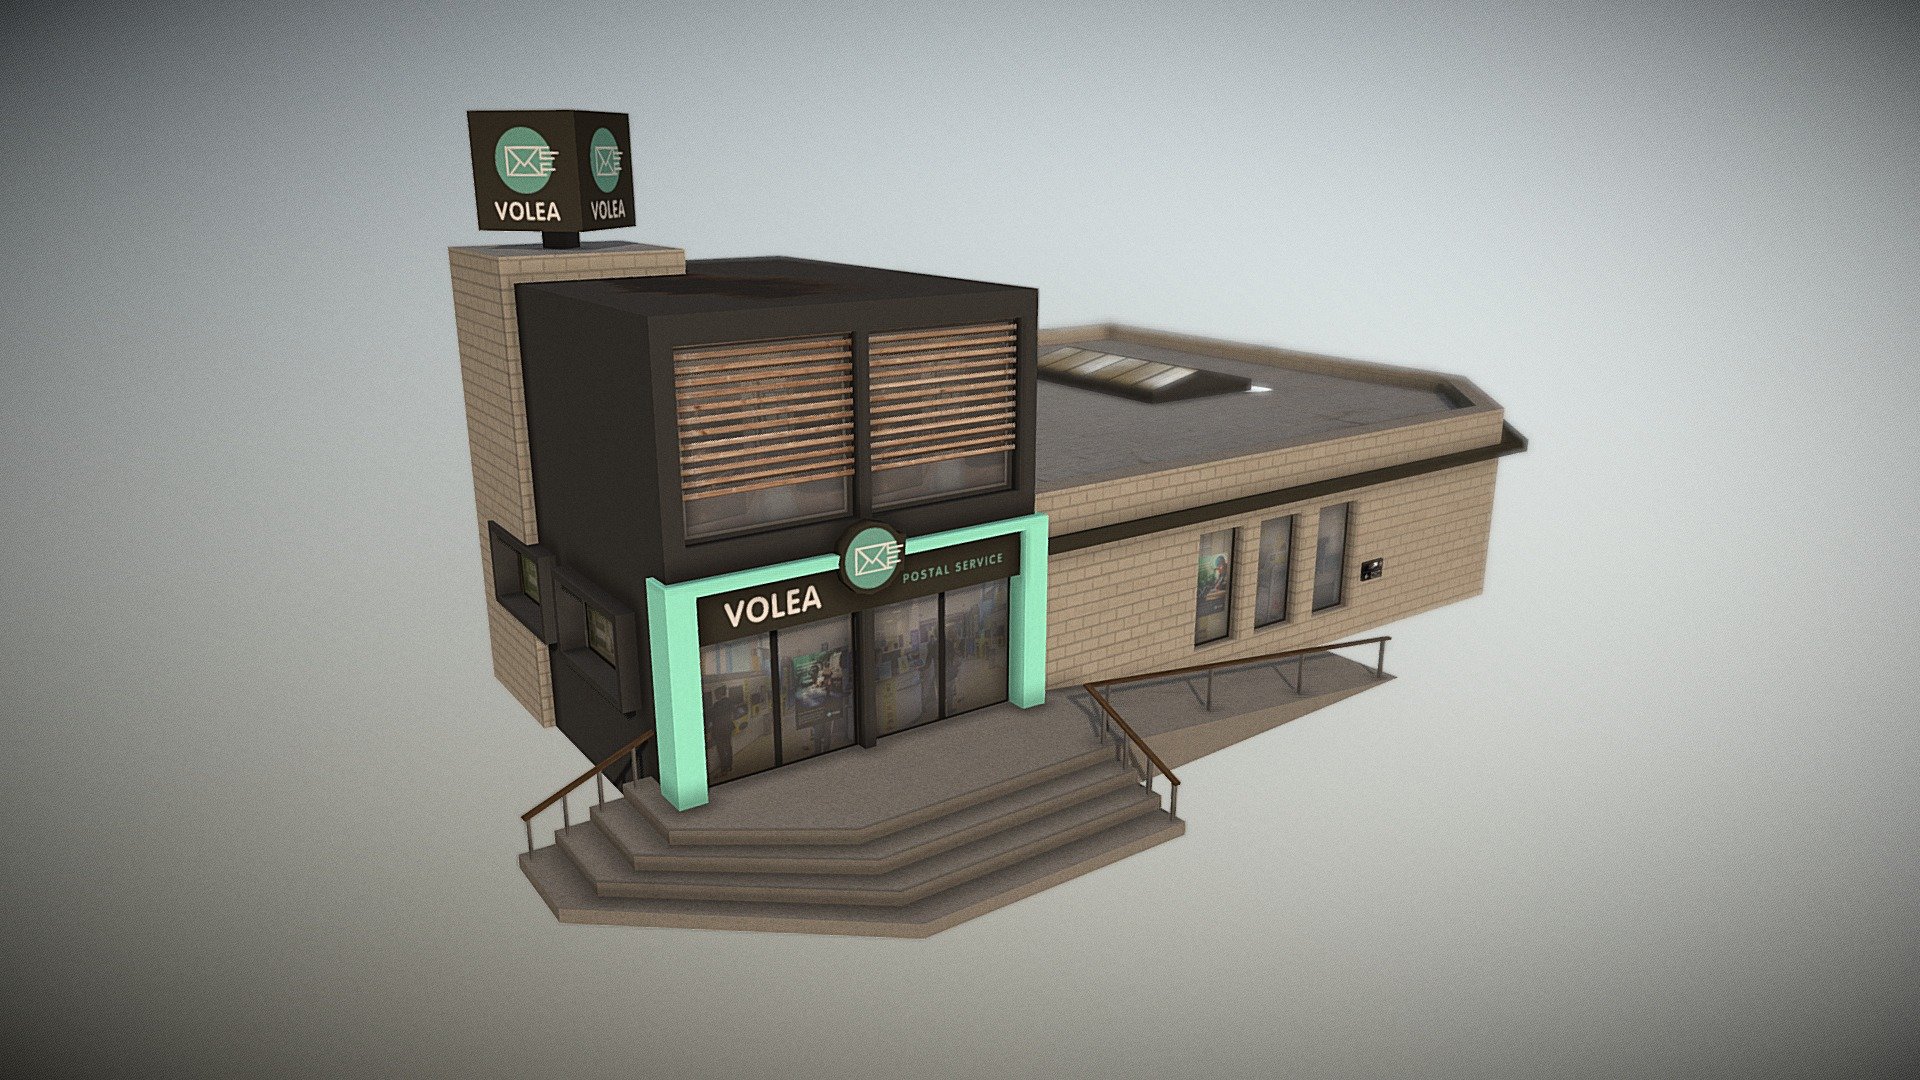 Volea post office - 3D model by GrunyStudio 3d model